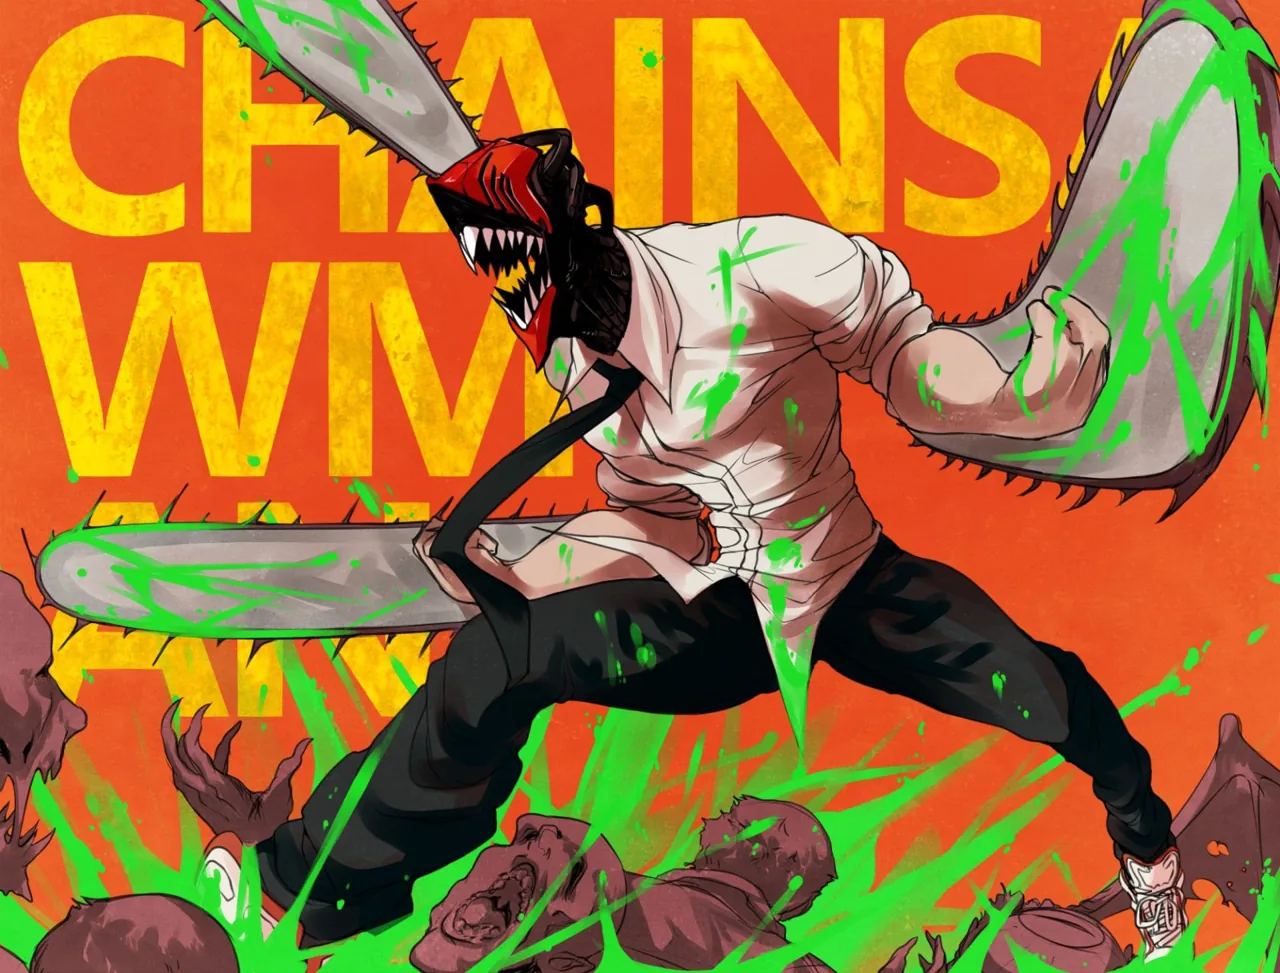 Chainsaw Man Manga Reaches 13 Million Copies in Circulation - Anime Corner